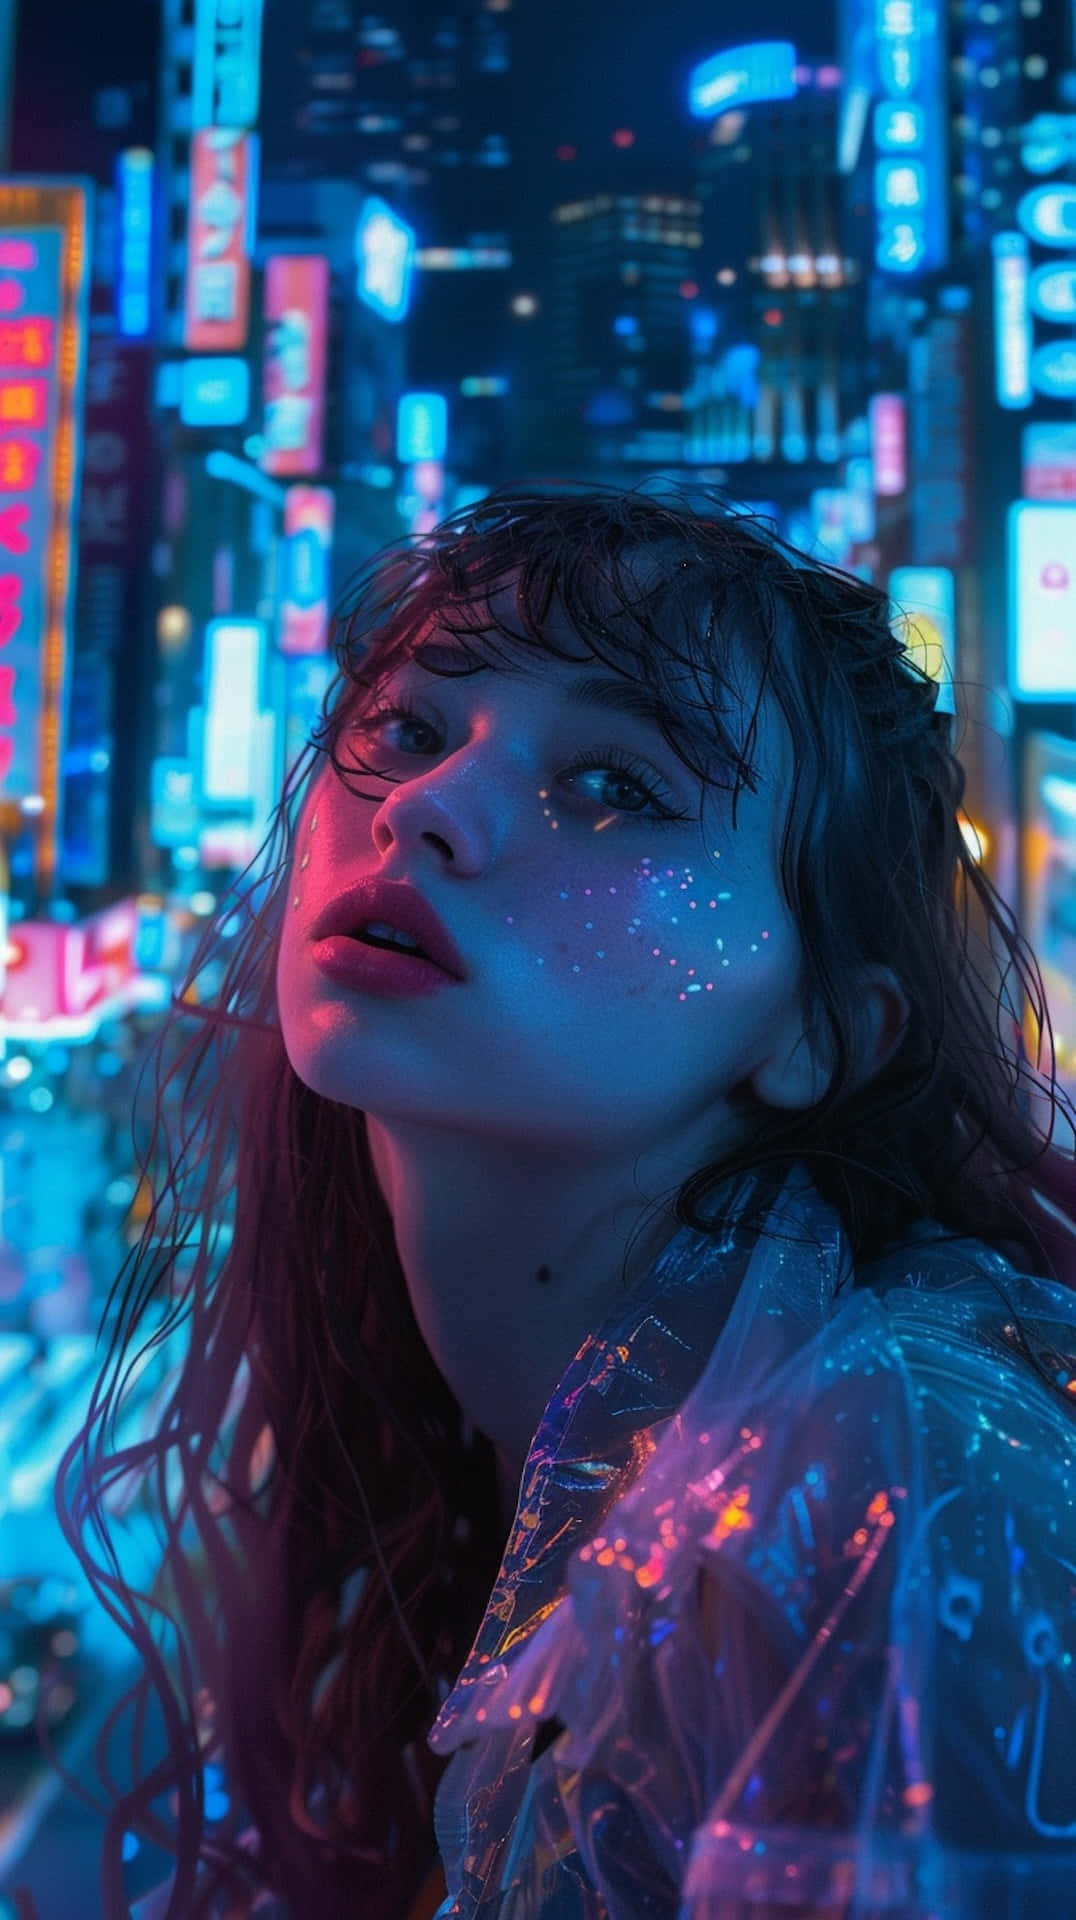 Neon Dreams Downtown Girl Wallpaper